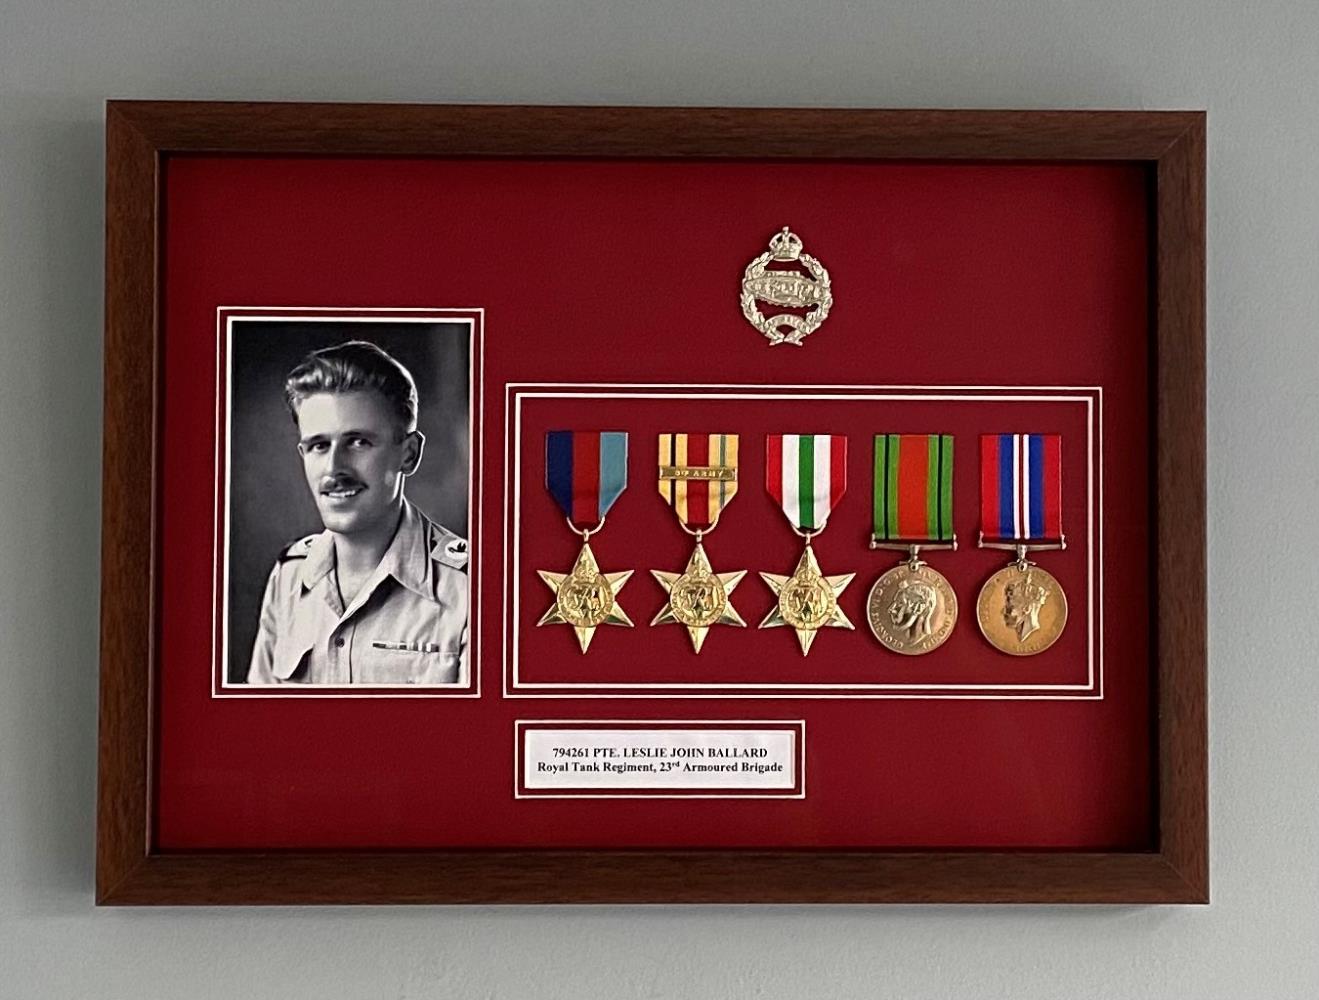 Worcestershire Medal Service: Framing